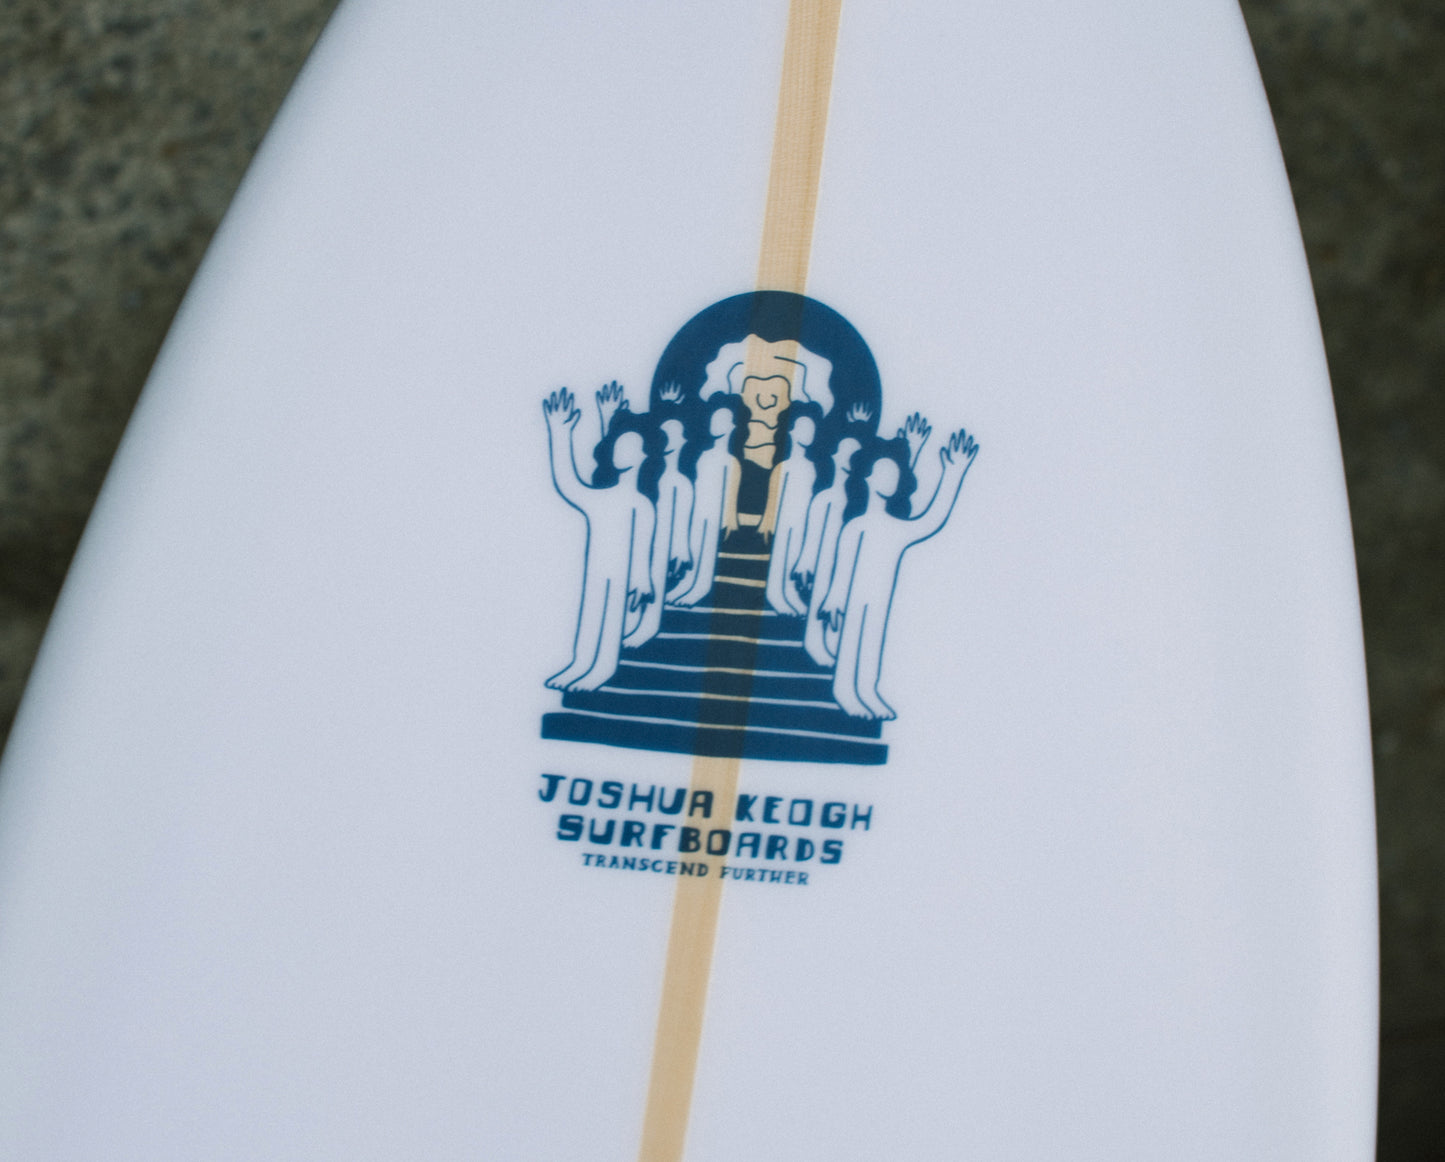 Joshua Keogh Surfboards